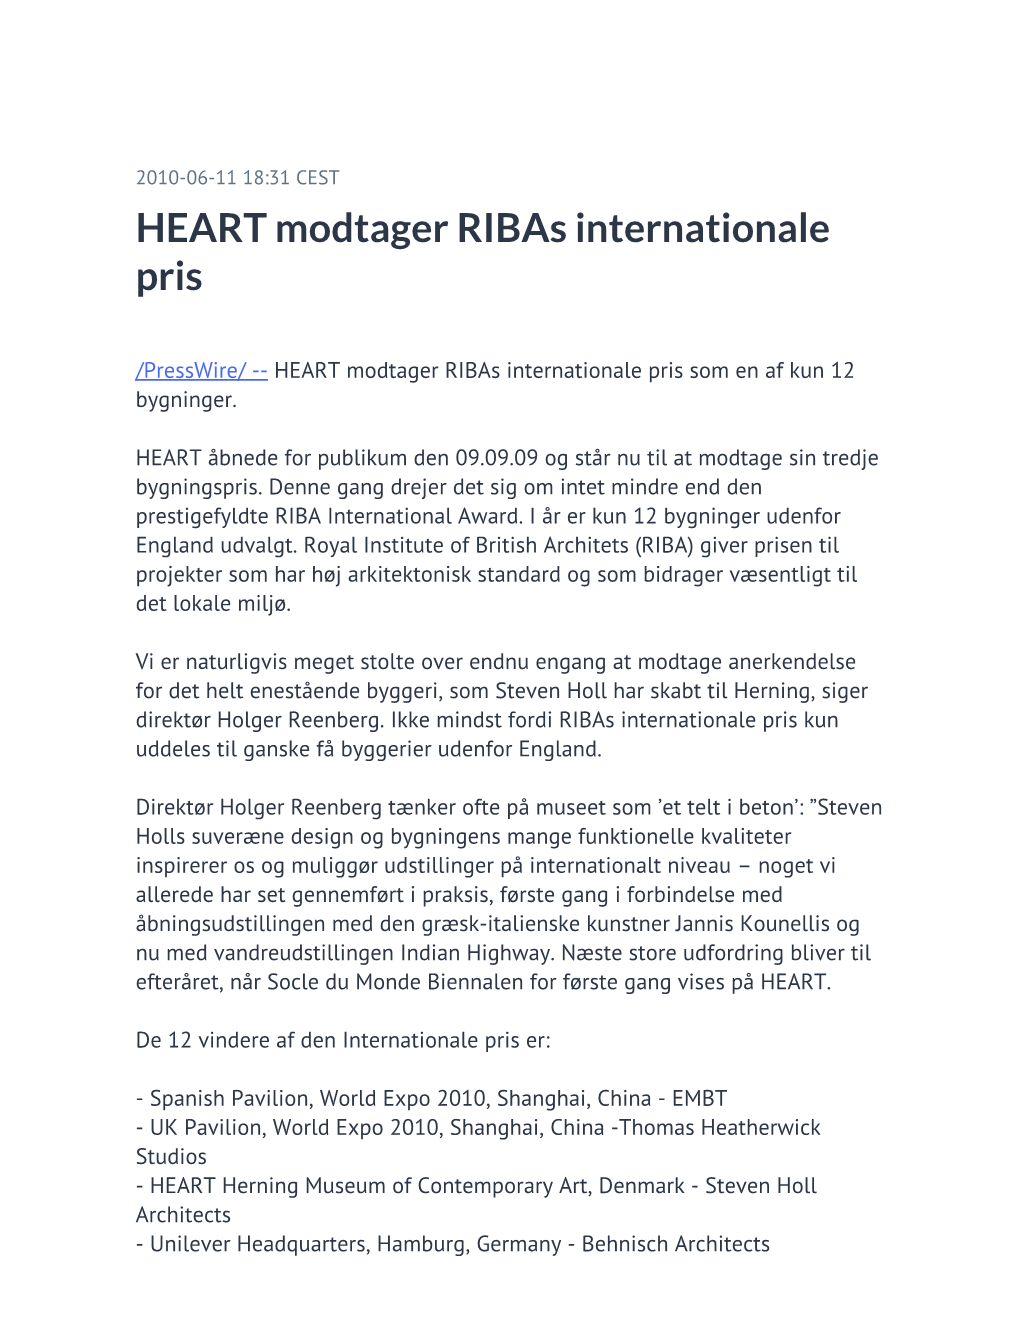 HEART Modtager Ribas Internationale Pris